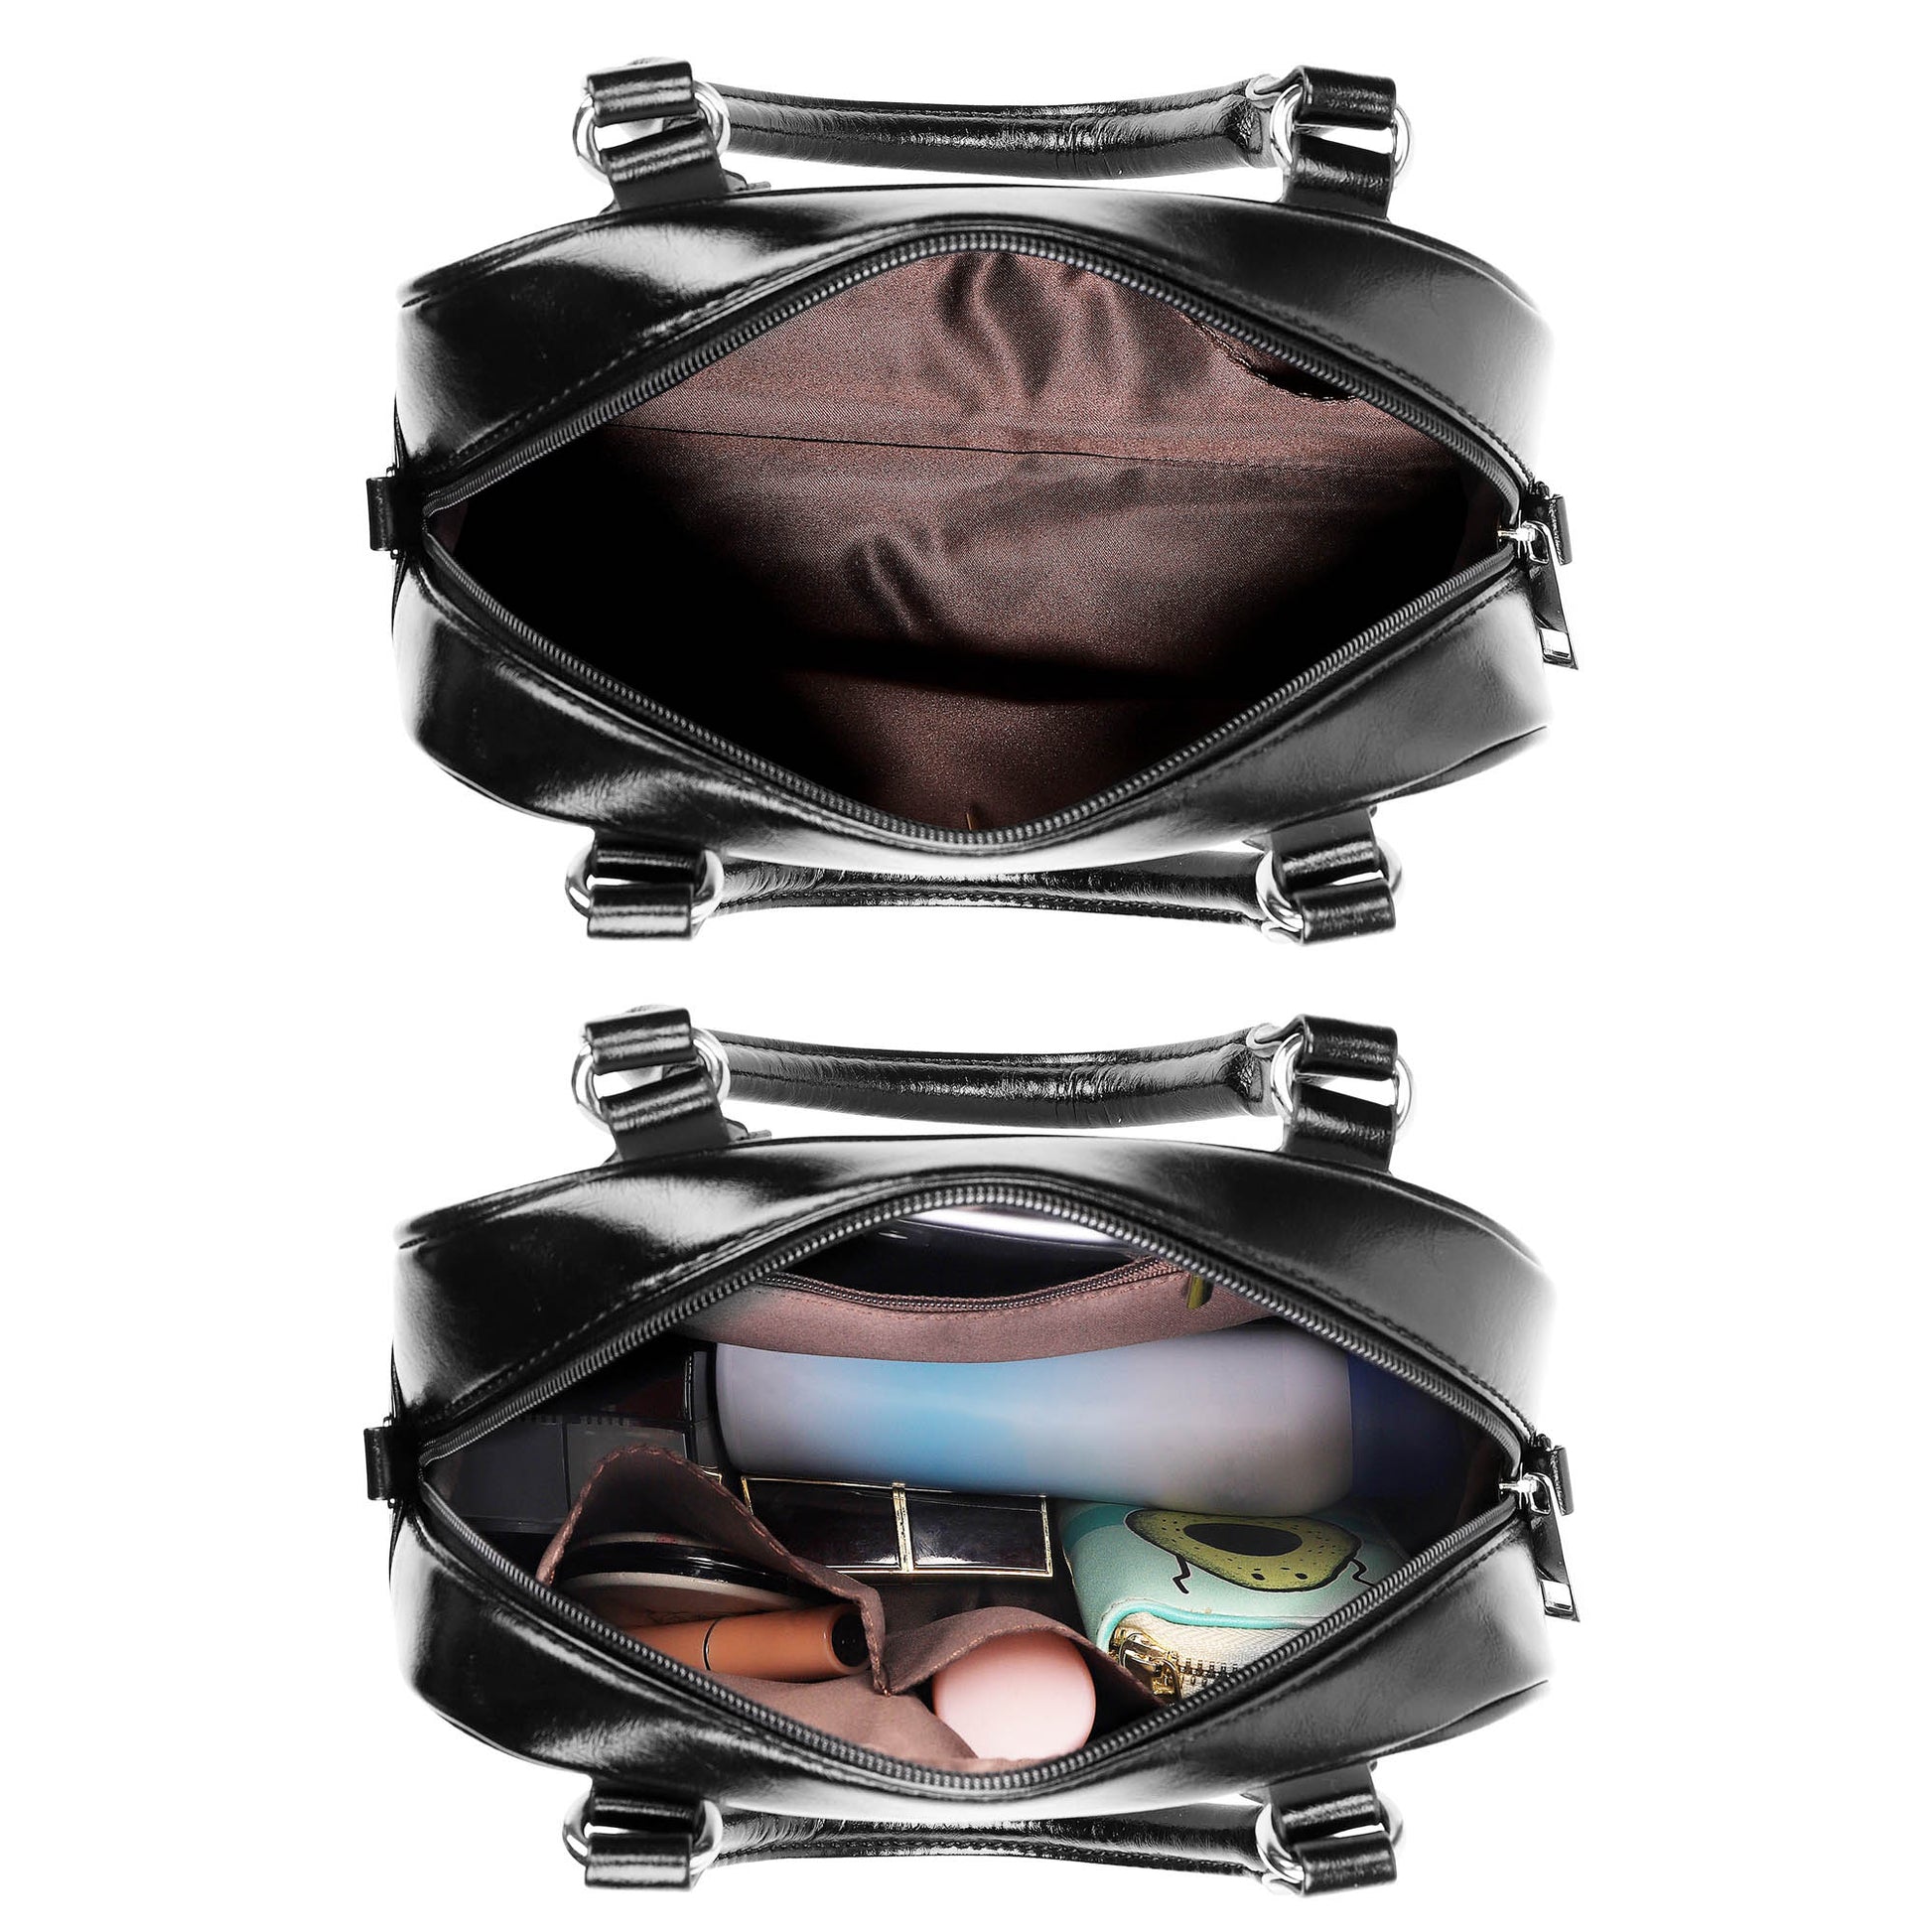 Charteris Tartan Shoulder Handbags with Family Crest - Tartanvibesclothing